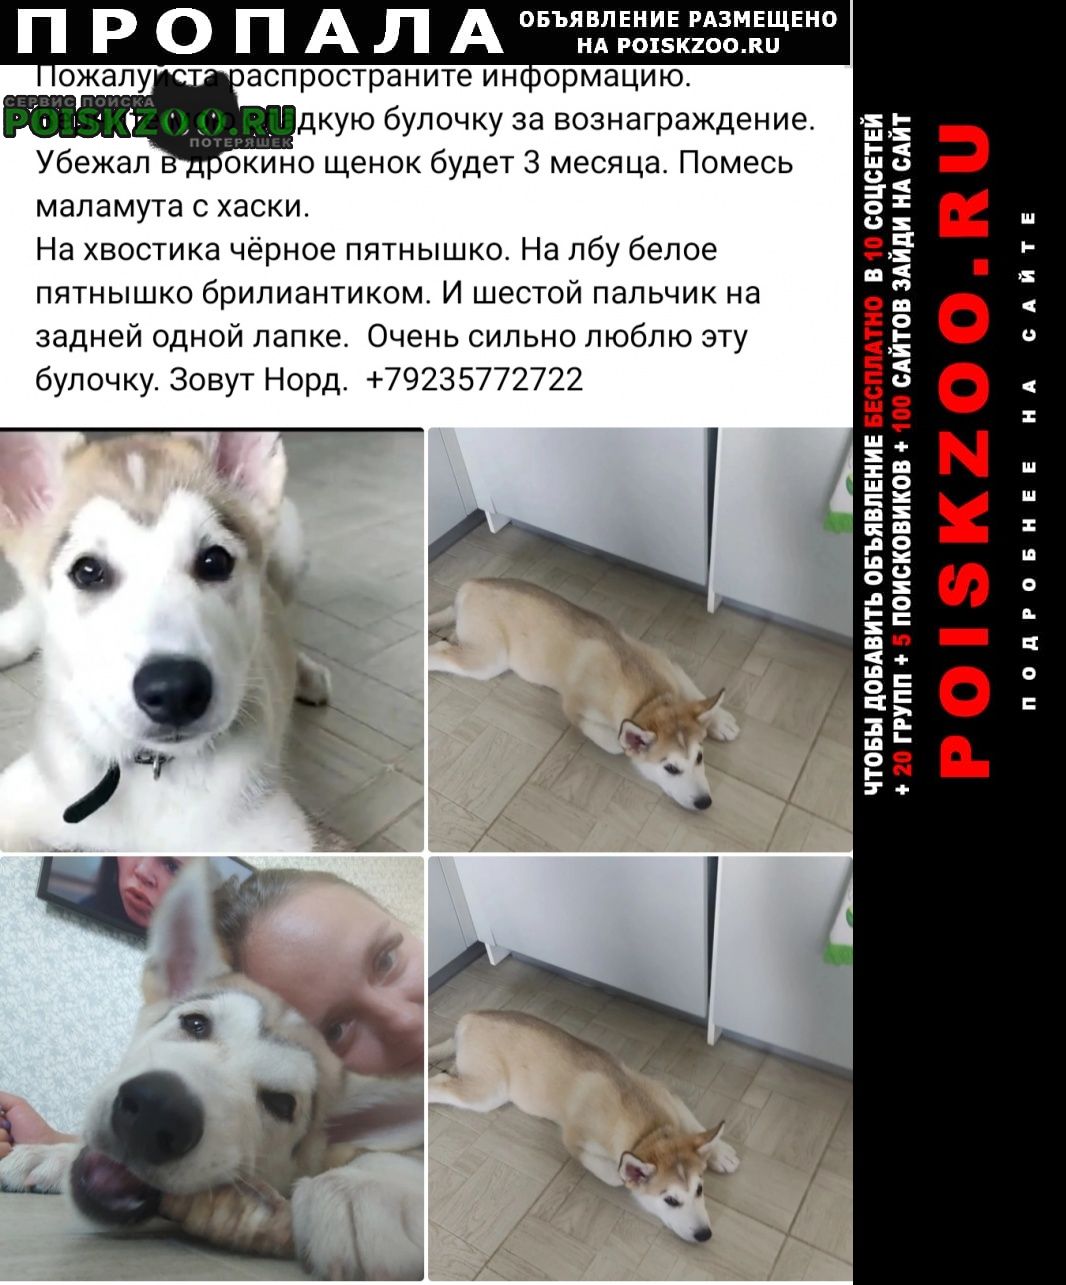 Пропала собака кобель зовут норд Красноярск